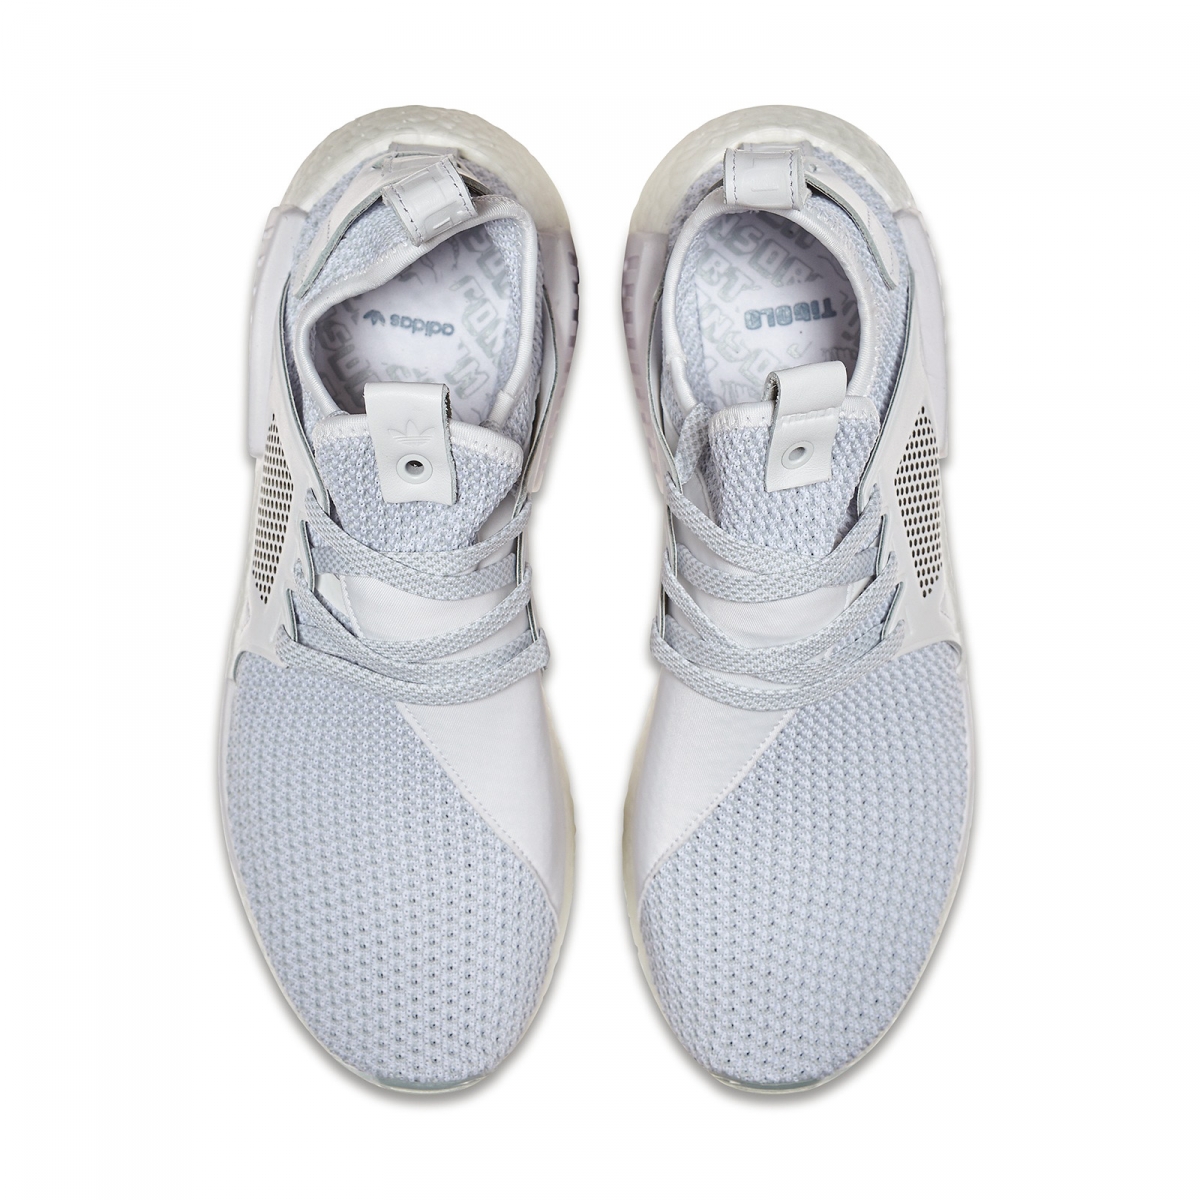 Adidas Consortium x Titolo
NMD_R1 Trail
White / Clear